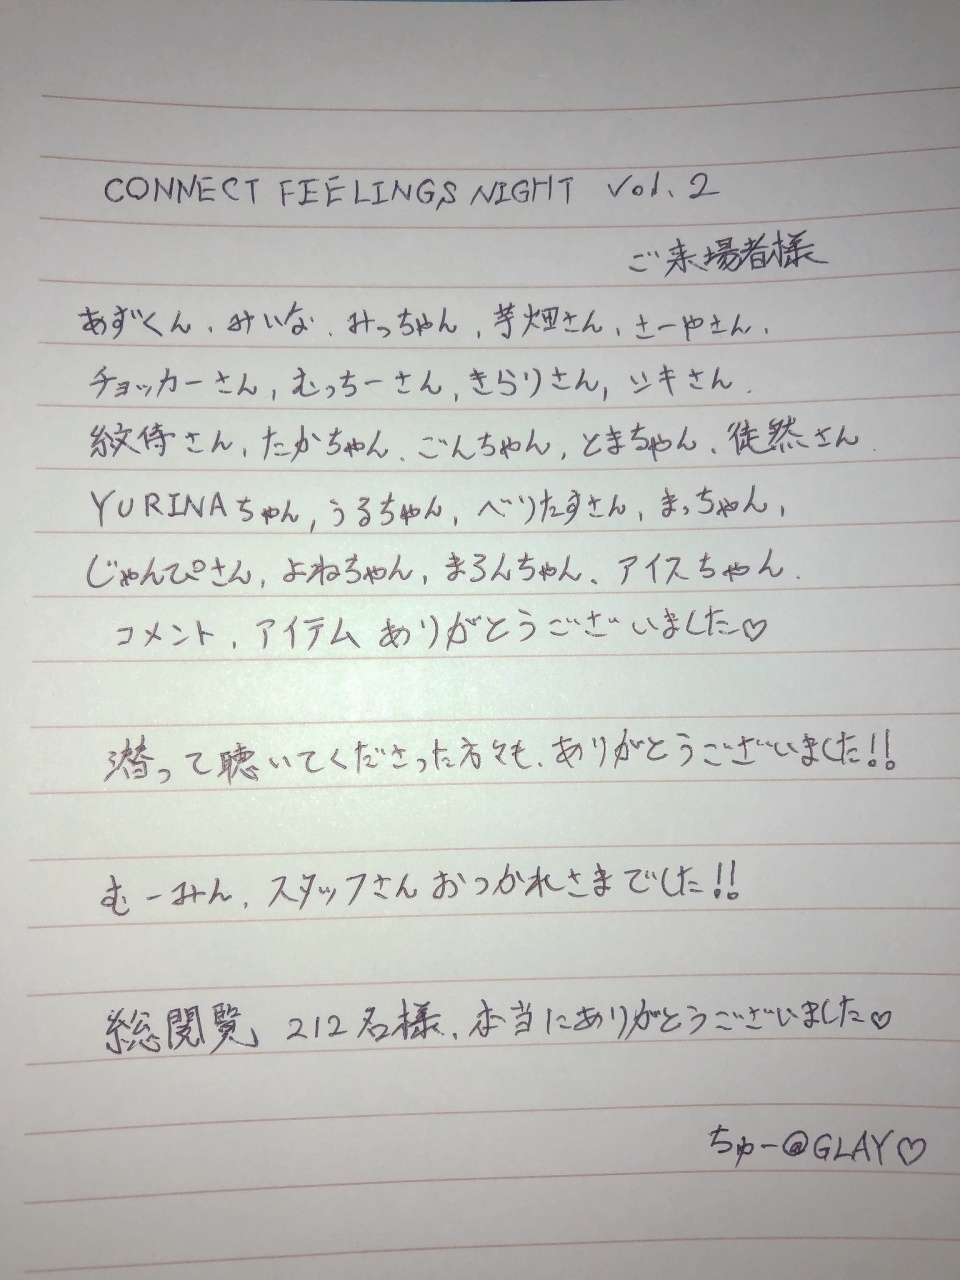 CONNECT FEELINGS NIGHT Vol.2 御来場者様へ💙
